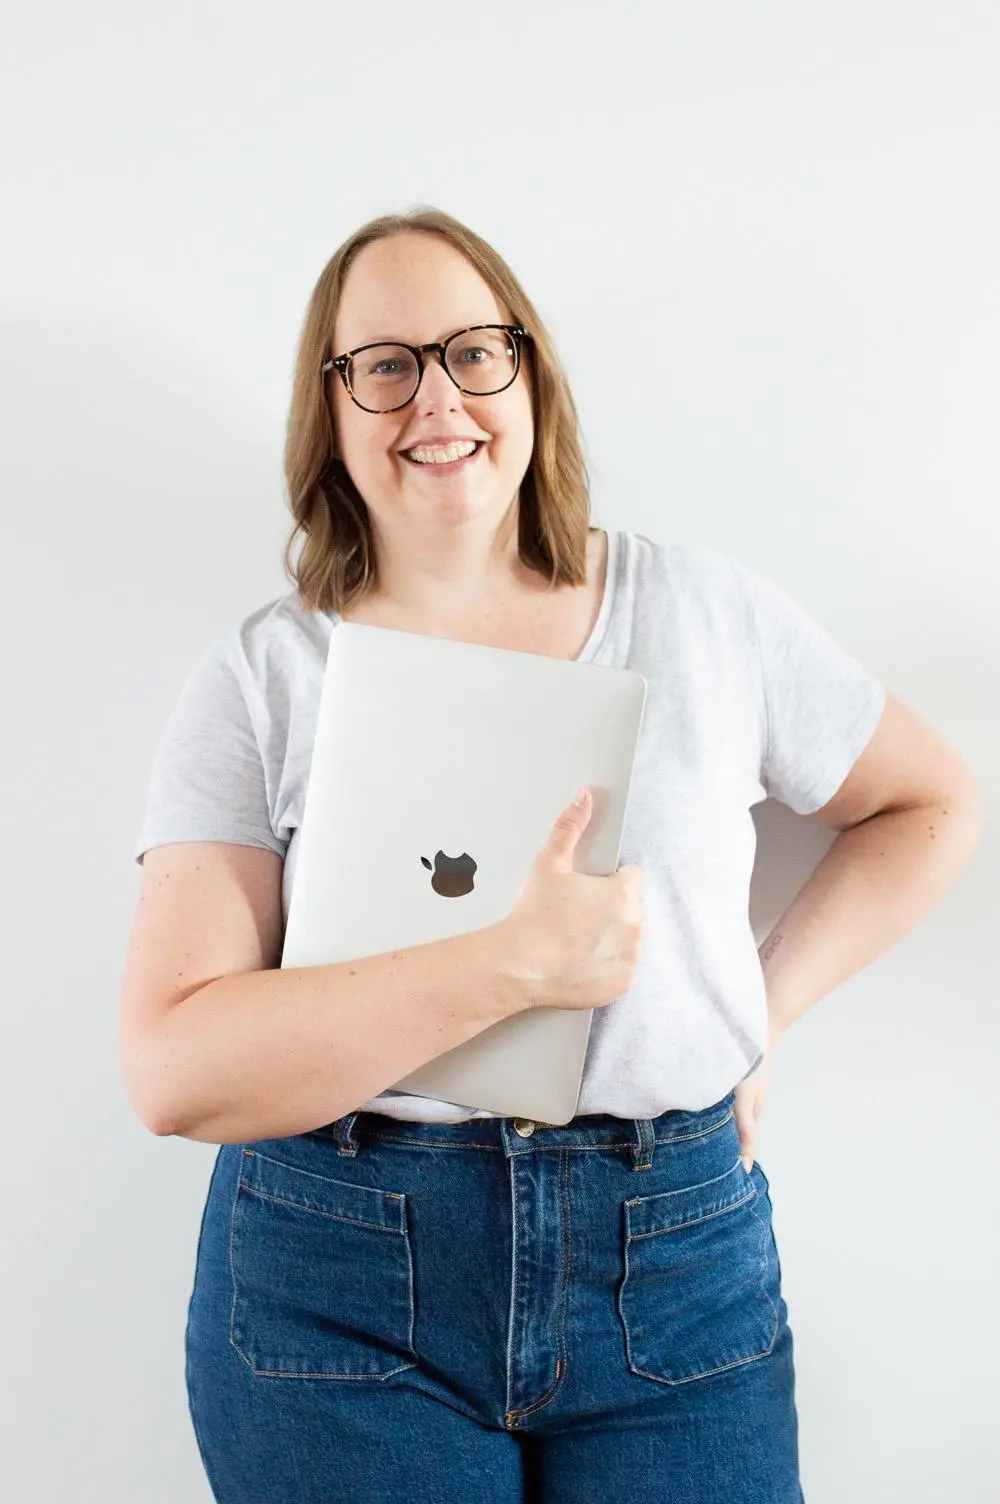 Nina Mills website designer, copywriter and SEO from Butter Digital holding a laptop.